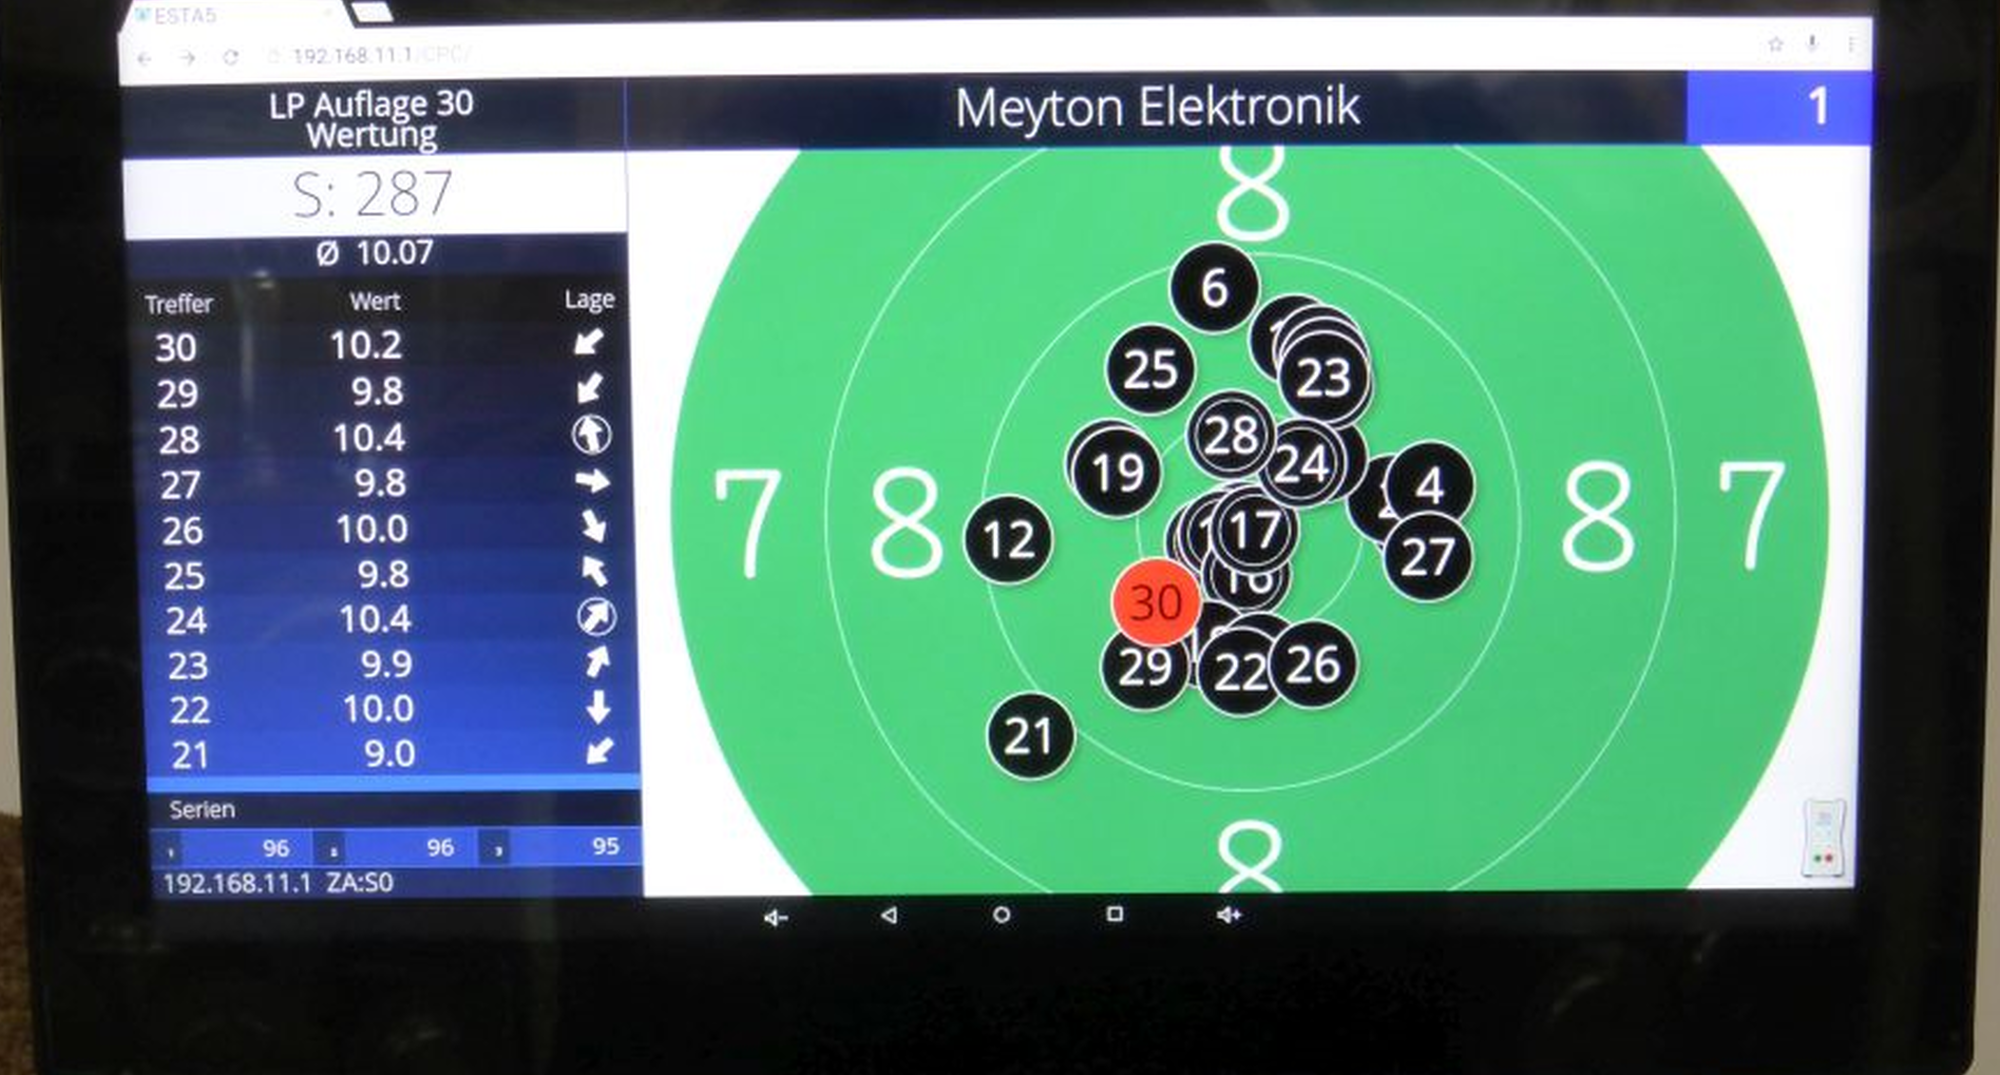 Meyton Bildschirm